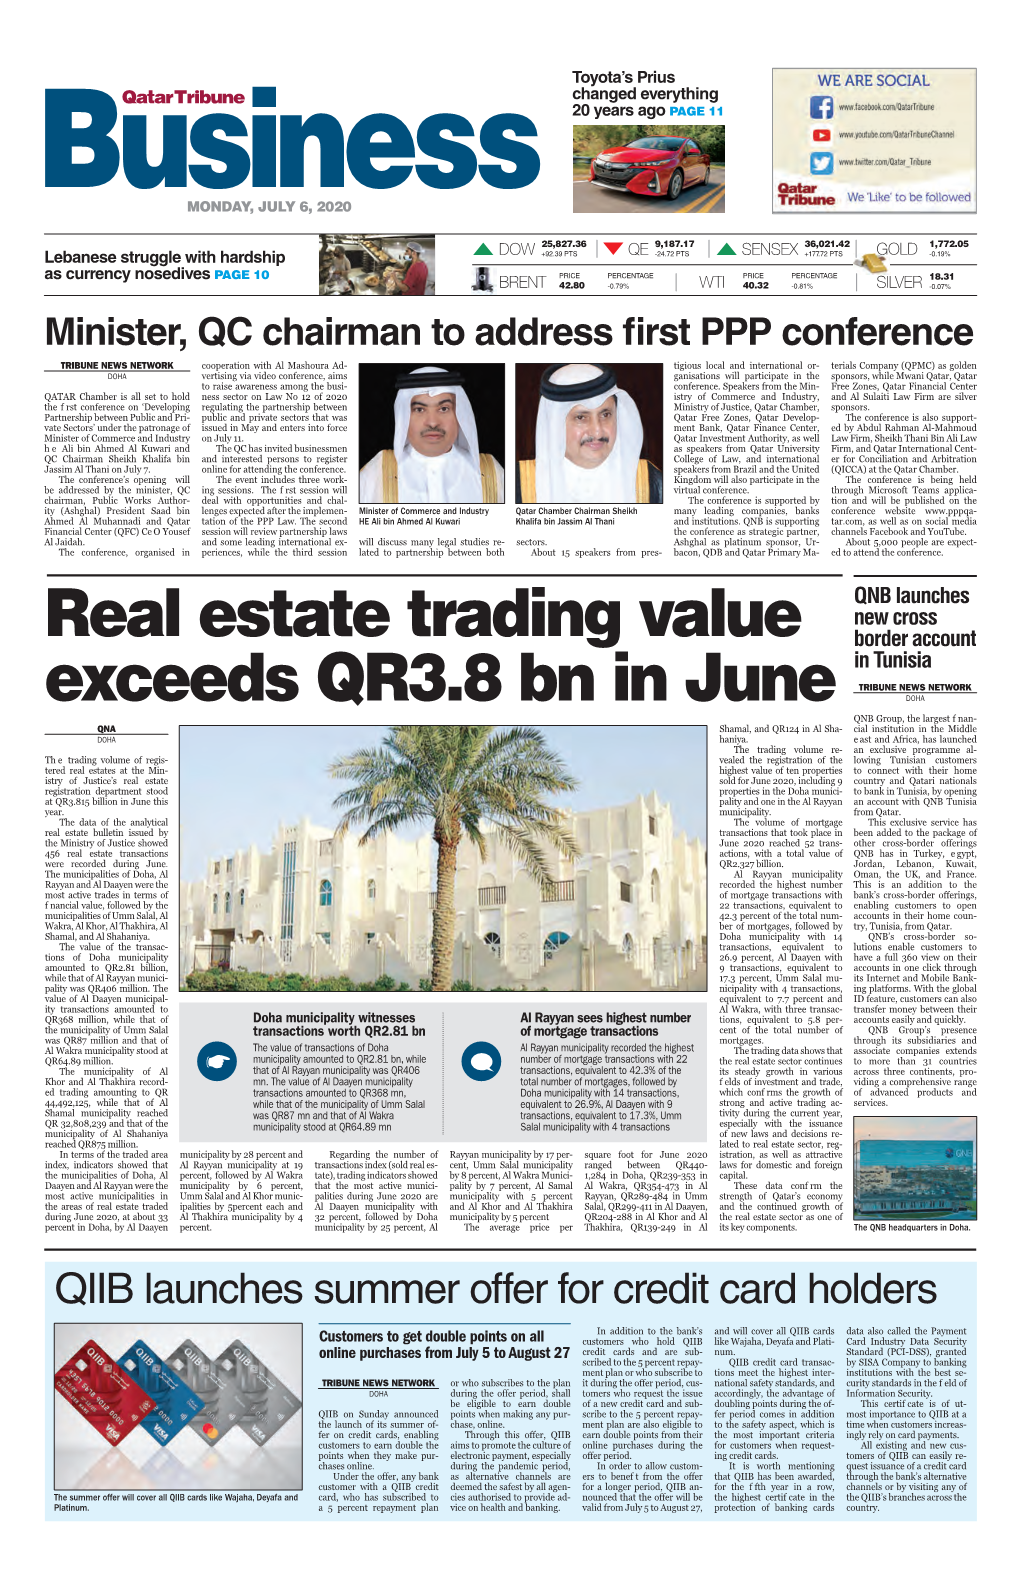 Real Estate Trading Value Exceeds QR3.8 Bn in June